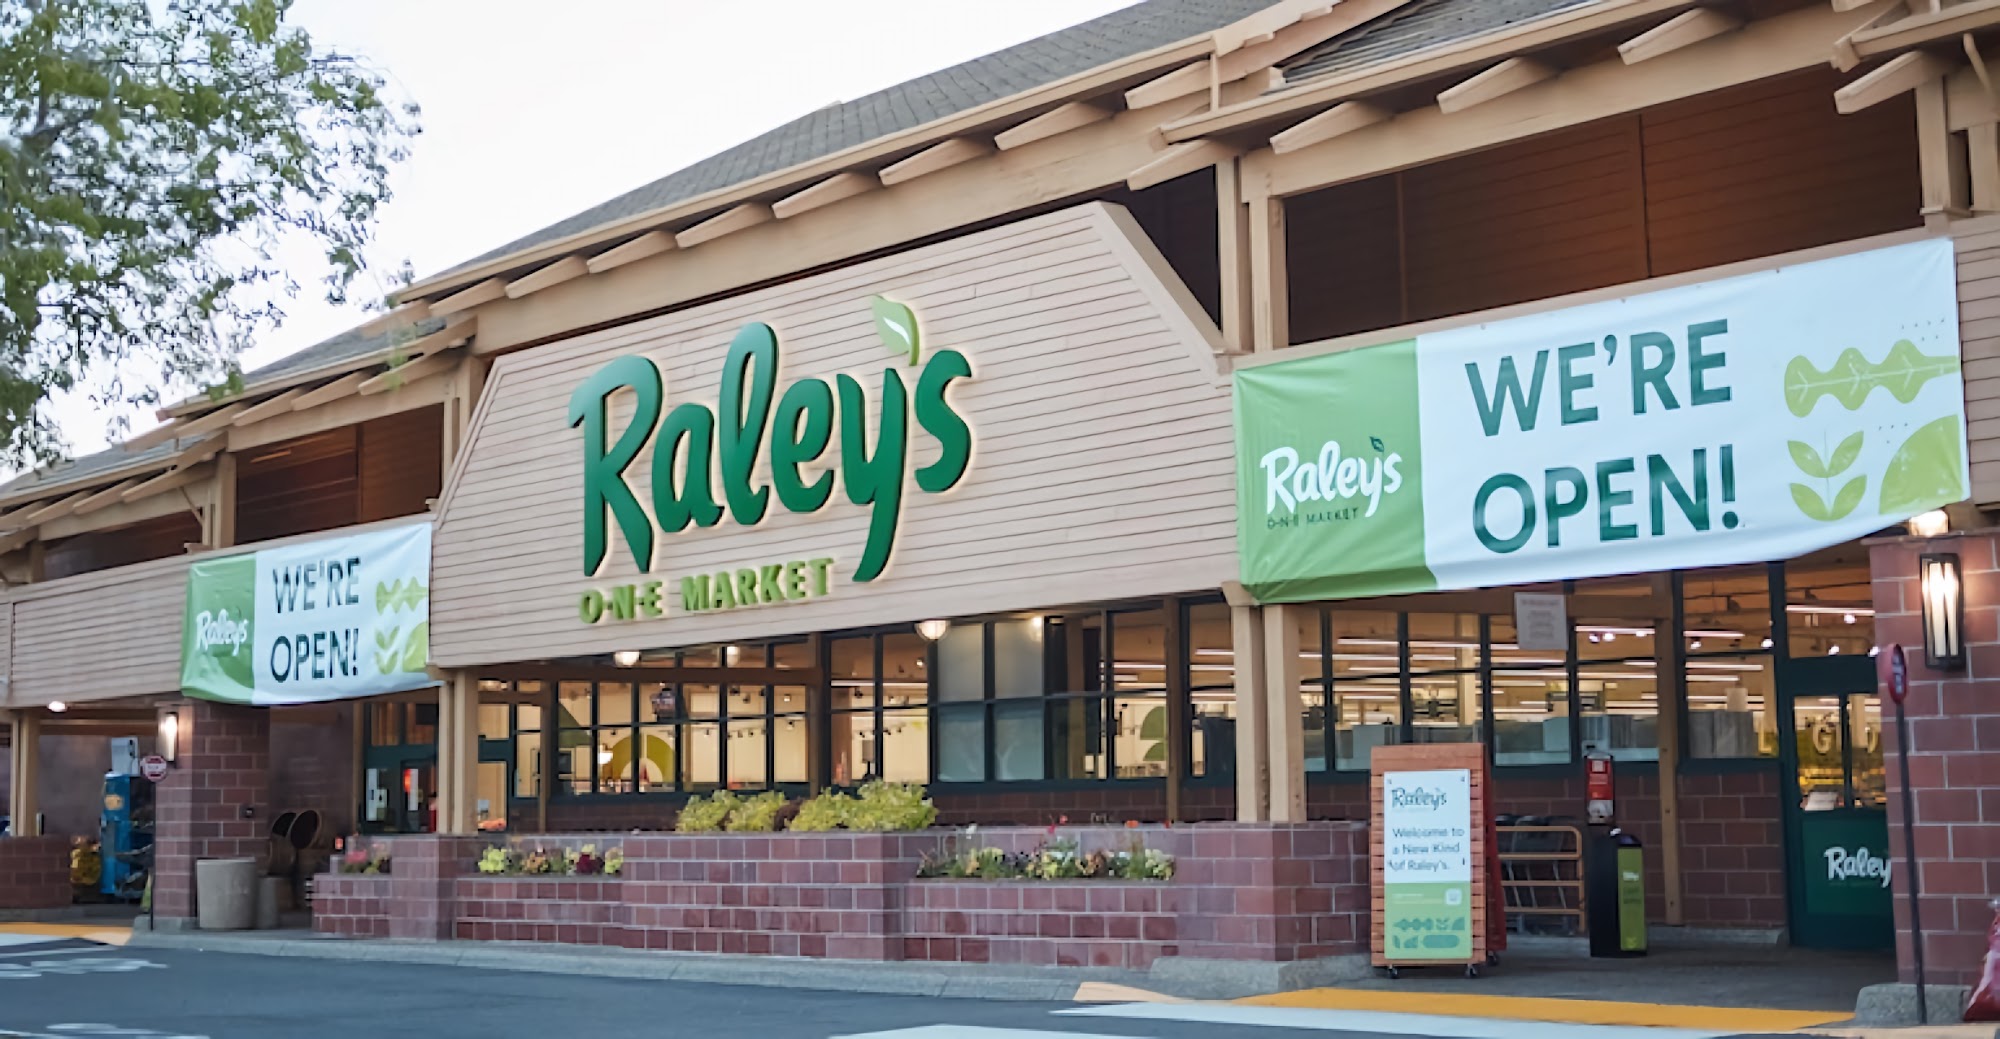 Raley's Pharmacy